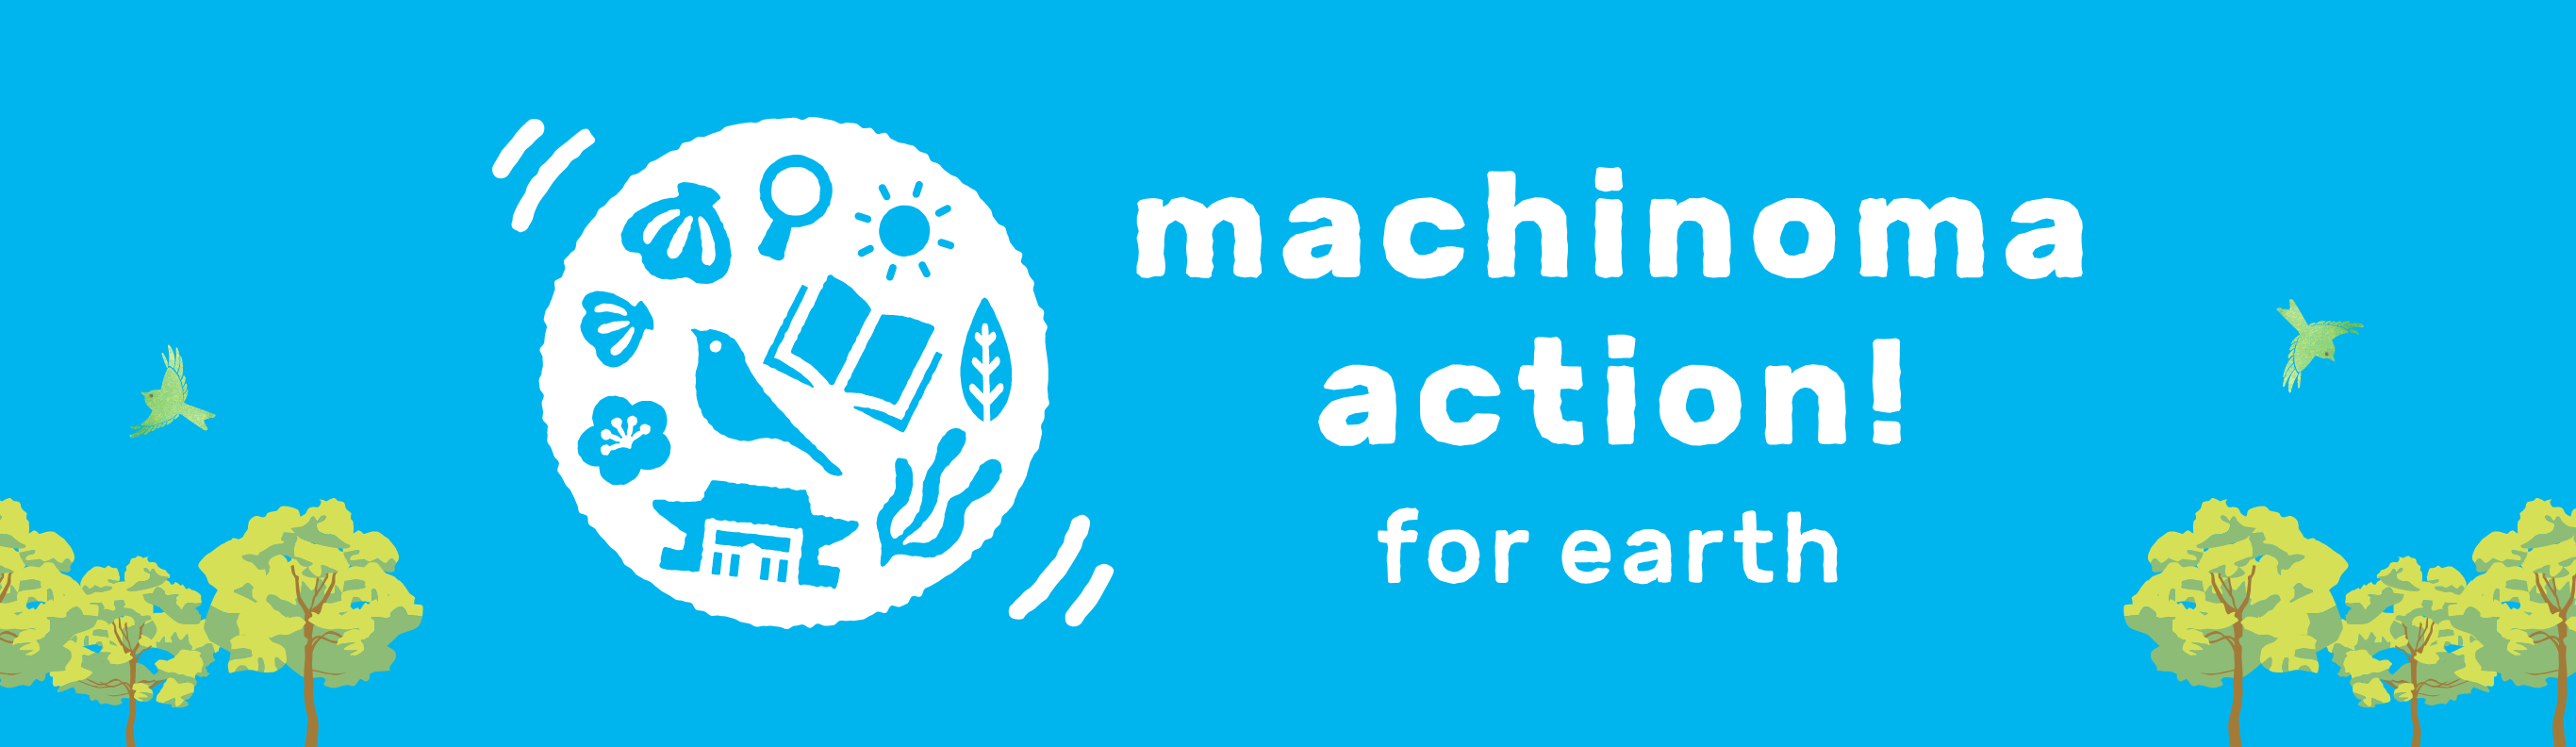 machinoma action! for earth | マチノマ大森